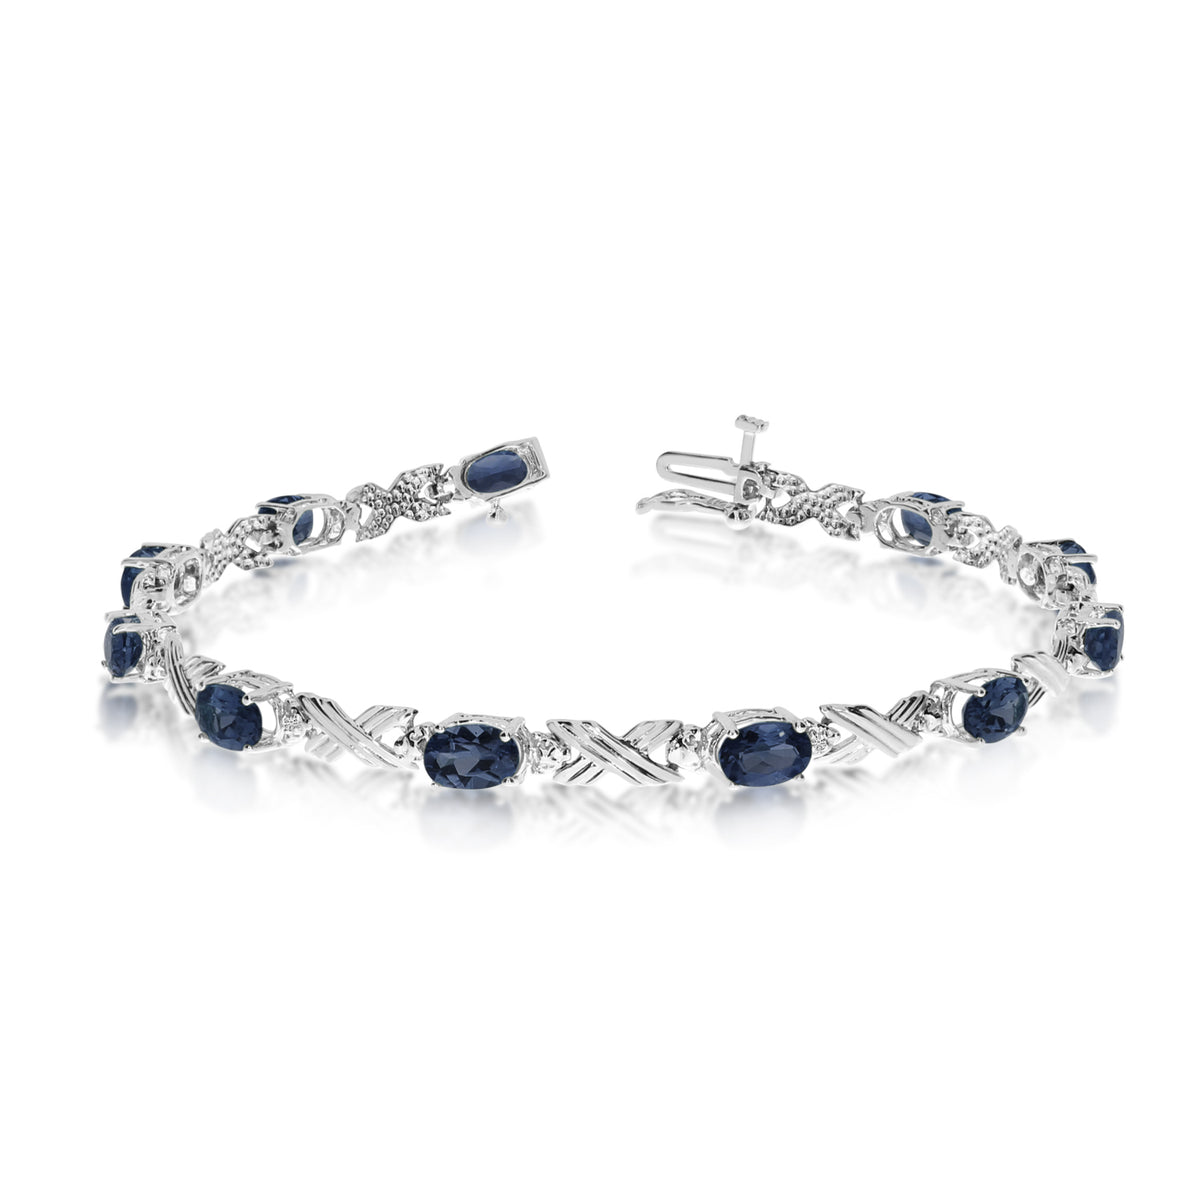 10K White Gold Oval Sapphire Stones And Diamonds Tennis Bracelet, 7" fine designer jewelry for men and women